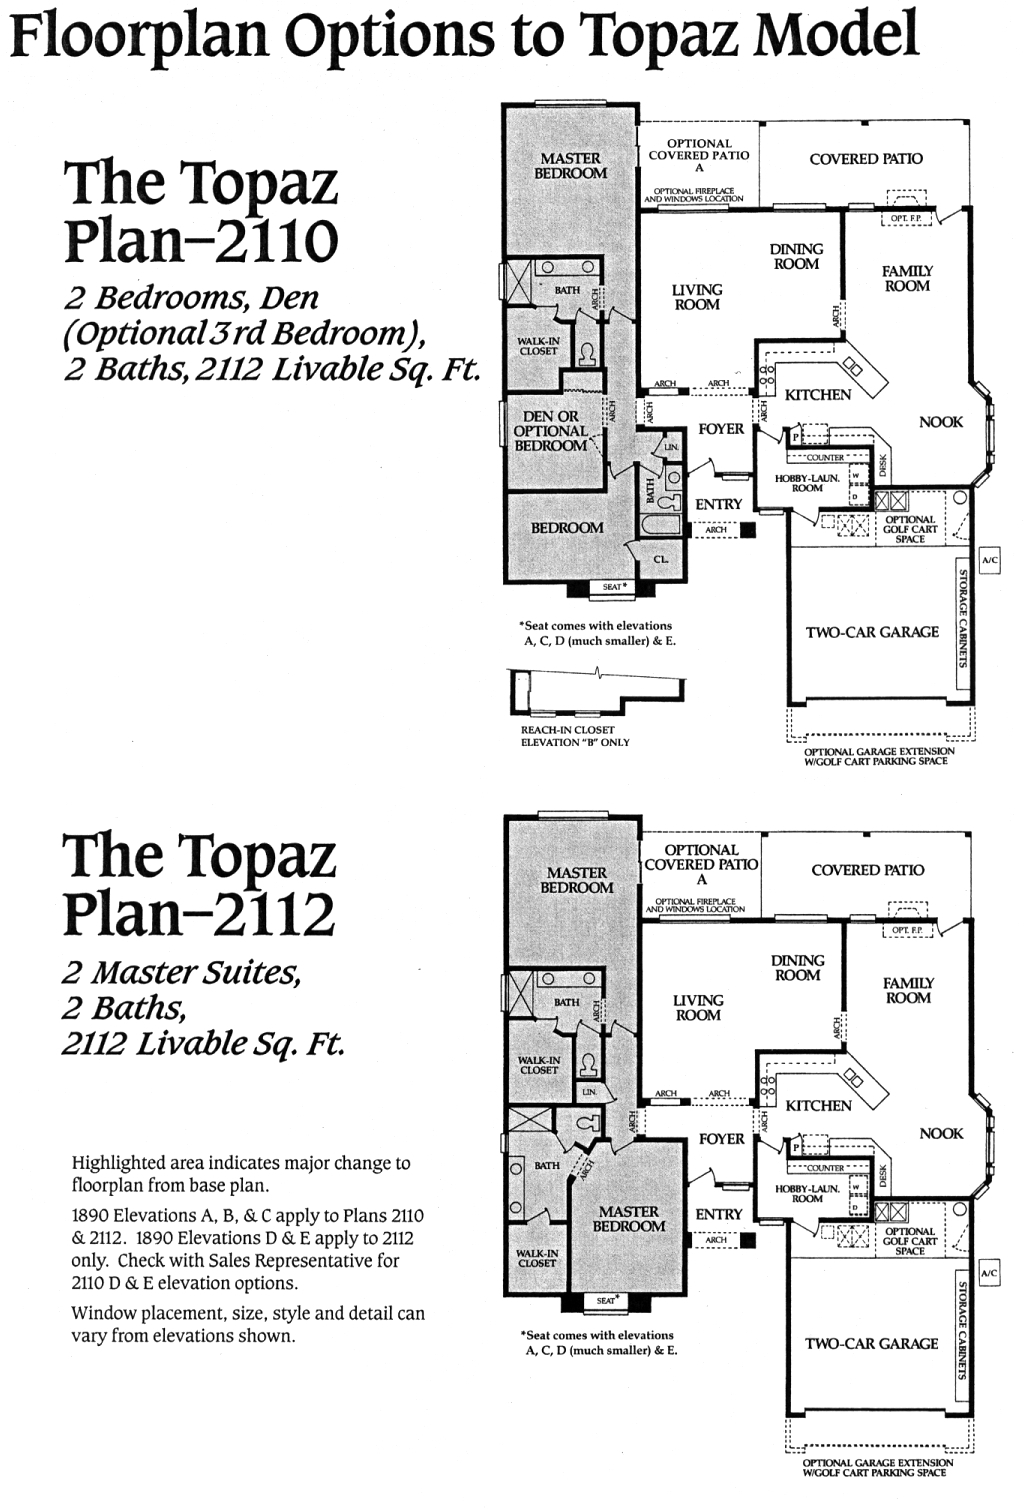 TOPAZ 2110-2112 OPTIONS